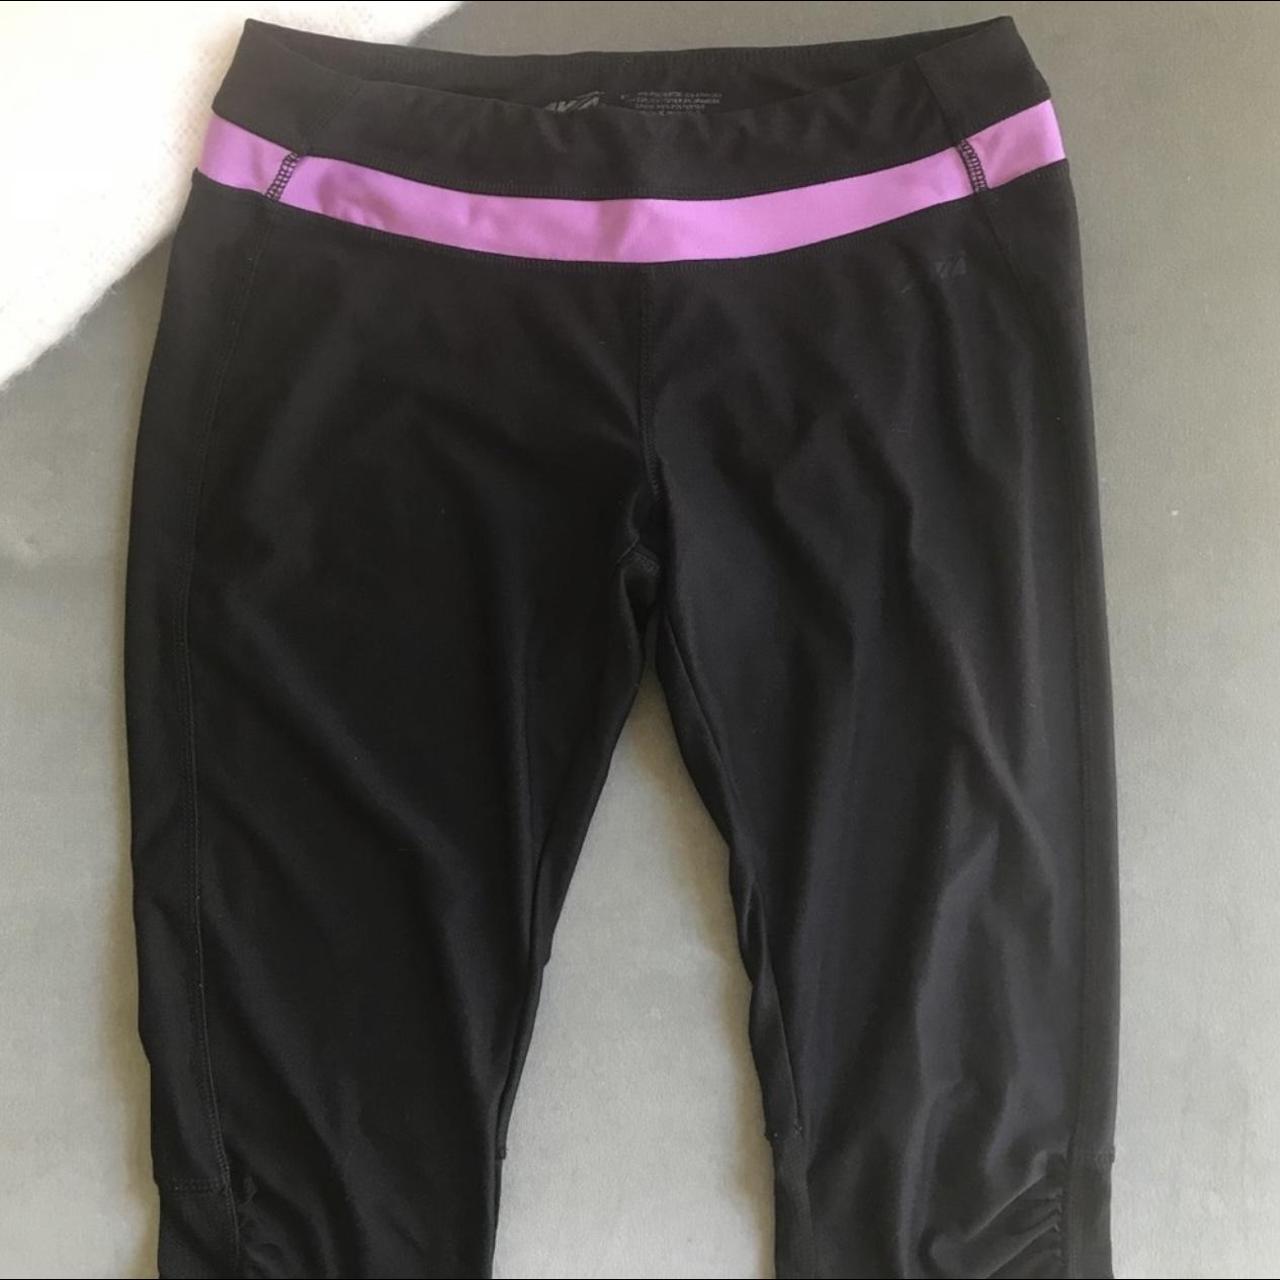 Avia Black workout pants in EUC with purple waist - Depop